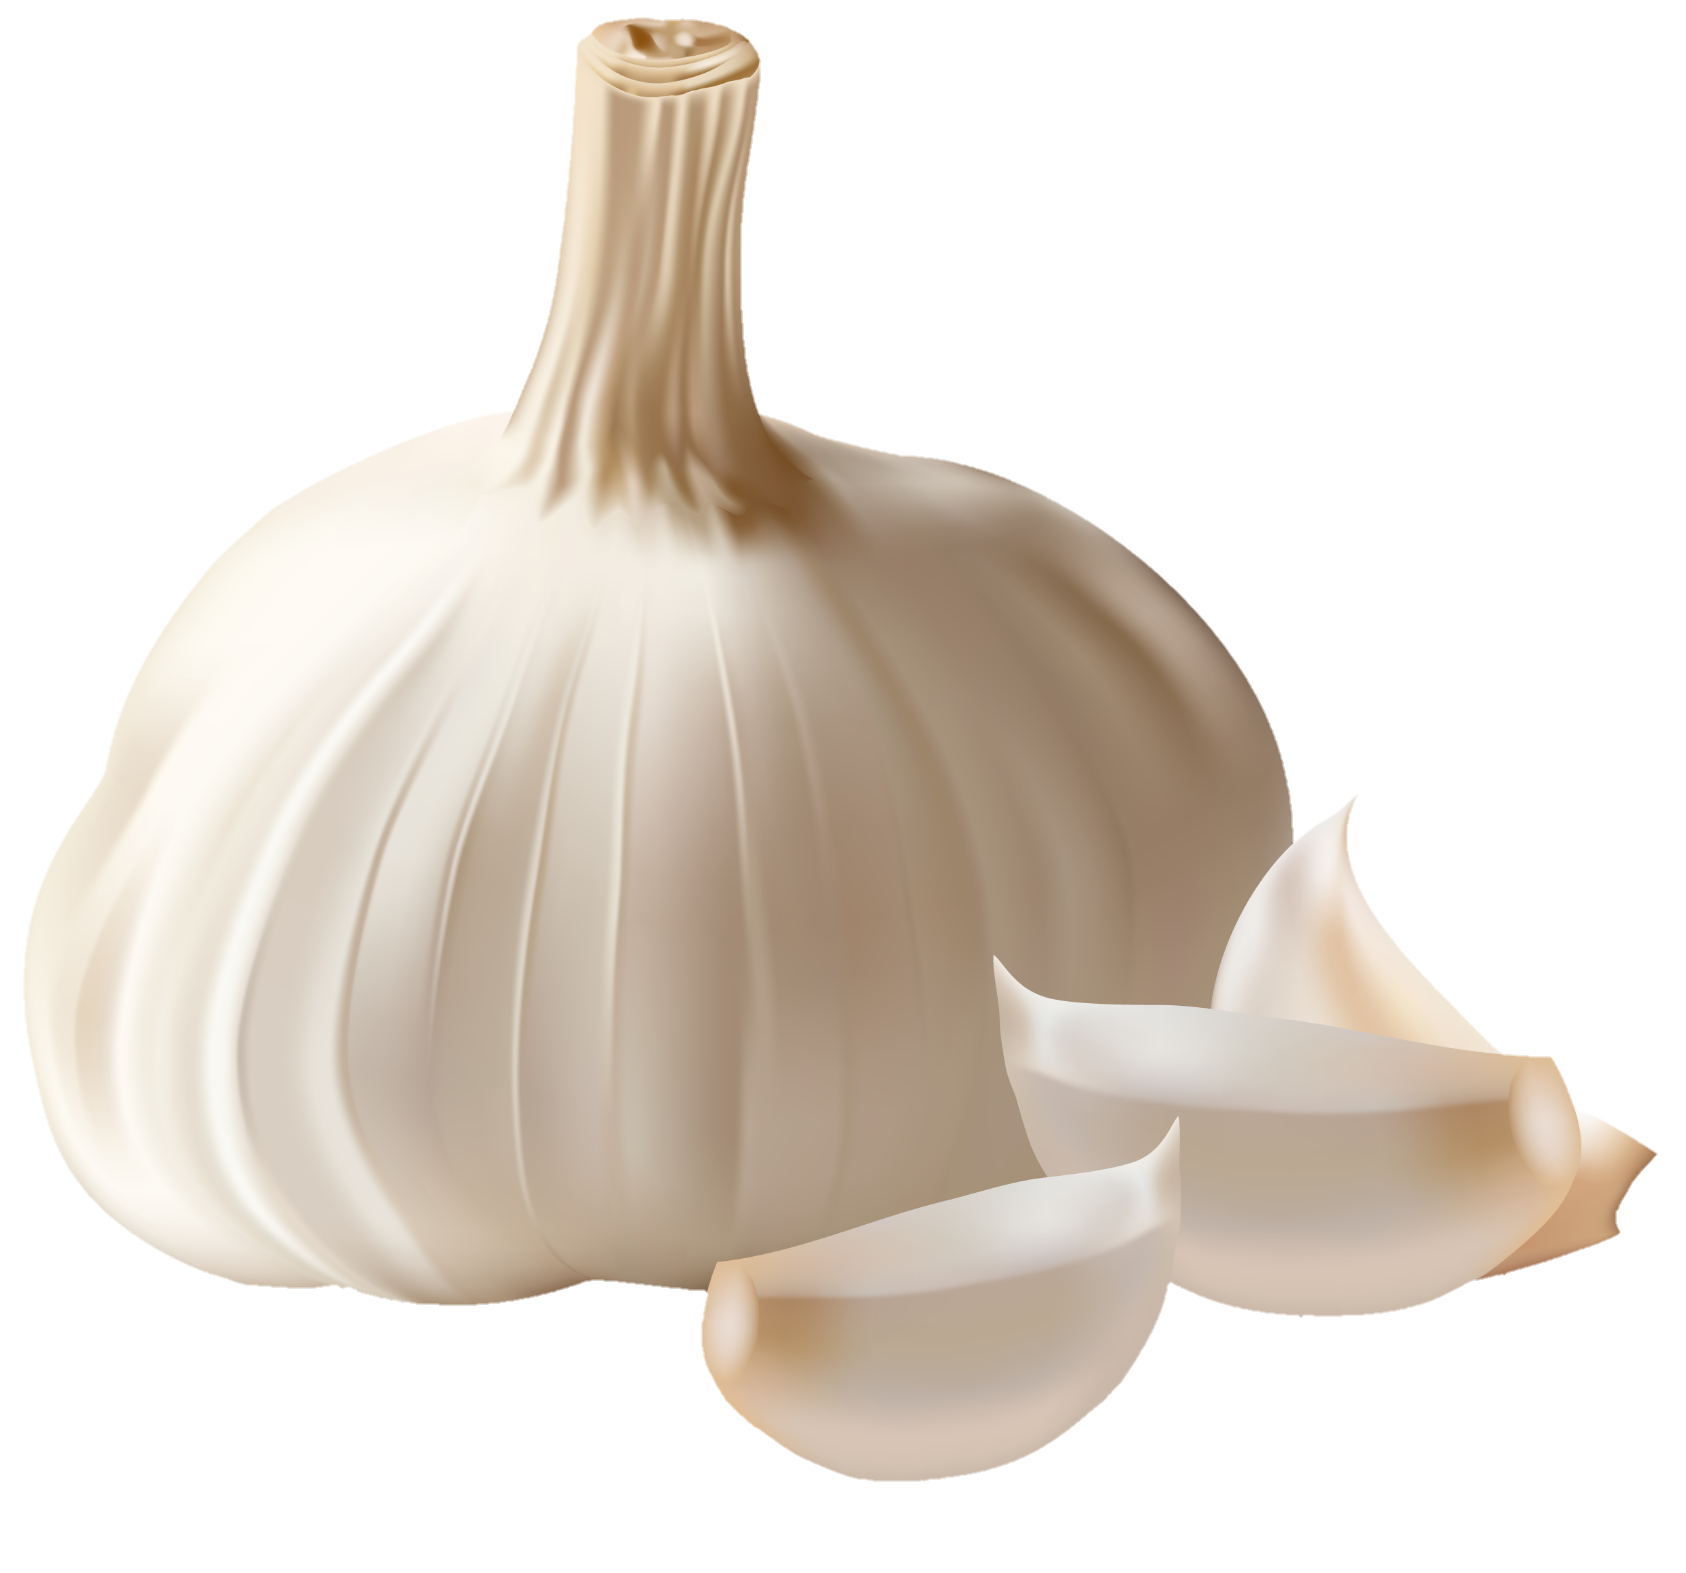 Garlic-12